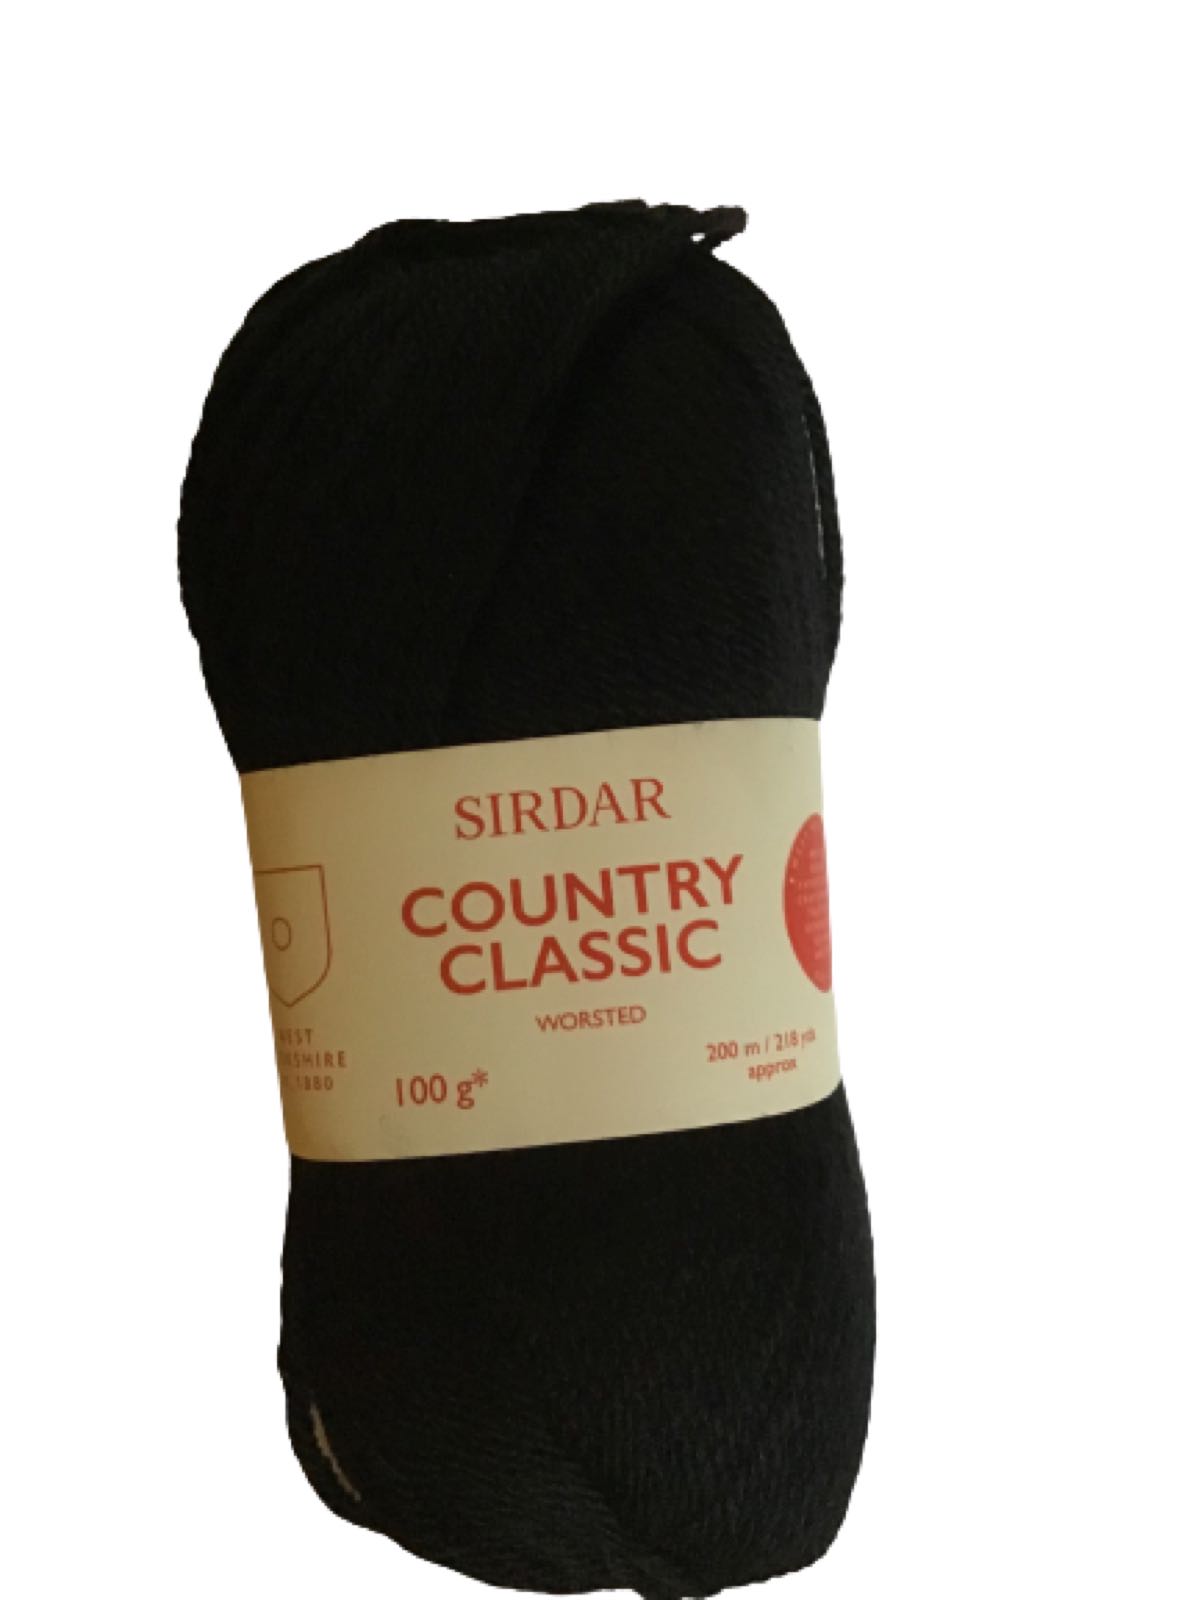 Sirdar Country Classic Worsted 50% Acrylic 50% Merino Wool (100g) - Black  (664) - Knit Knack Shack